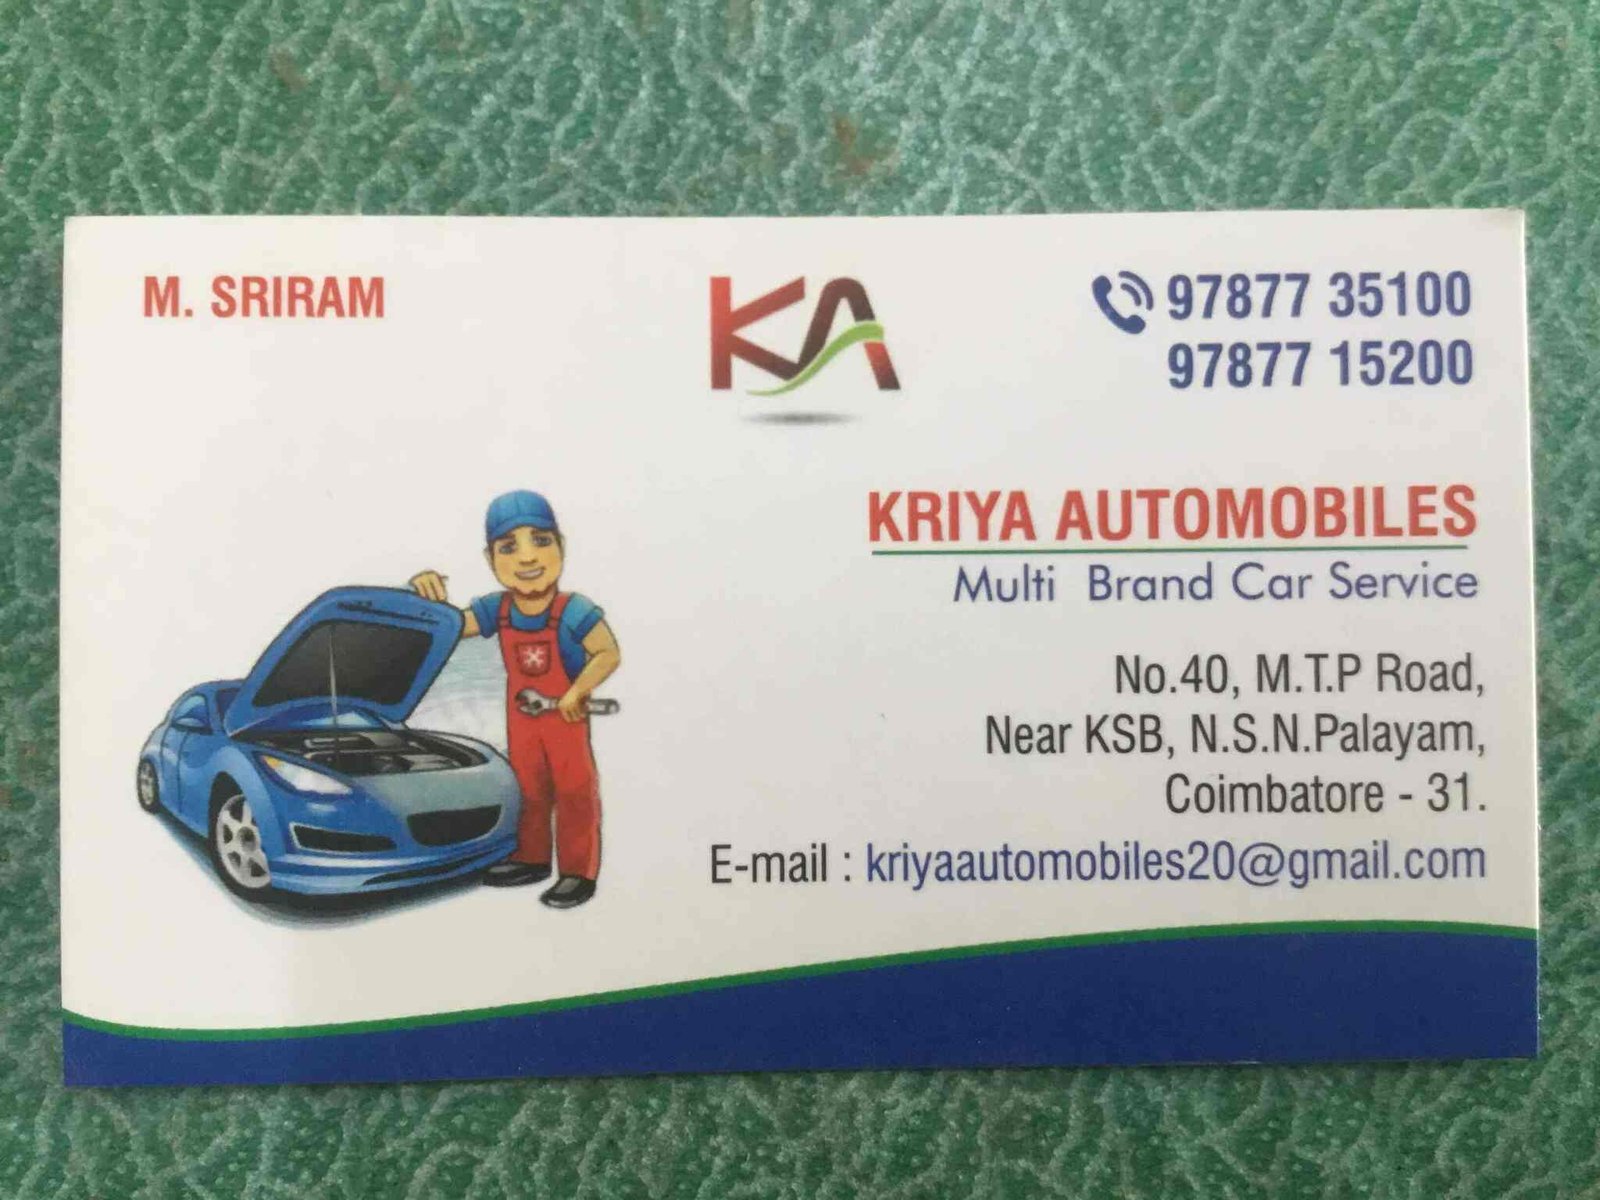 Kriya Automobiles